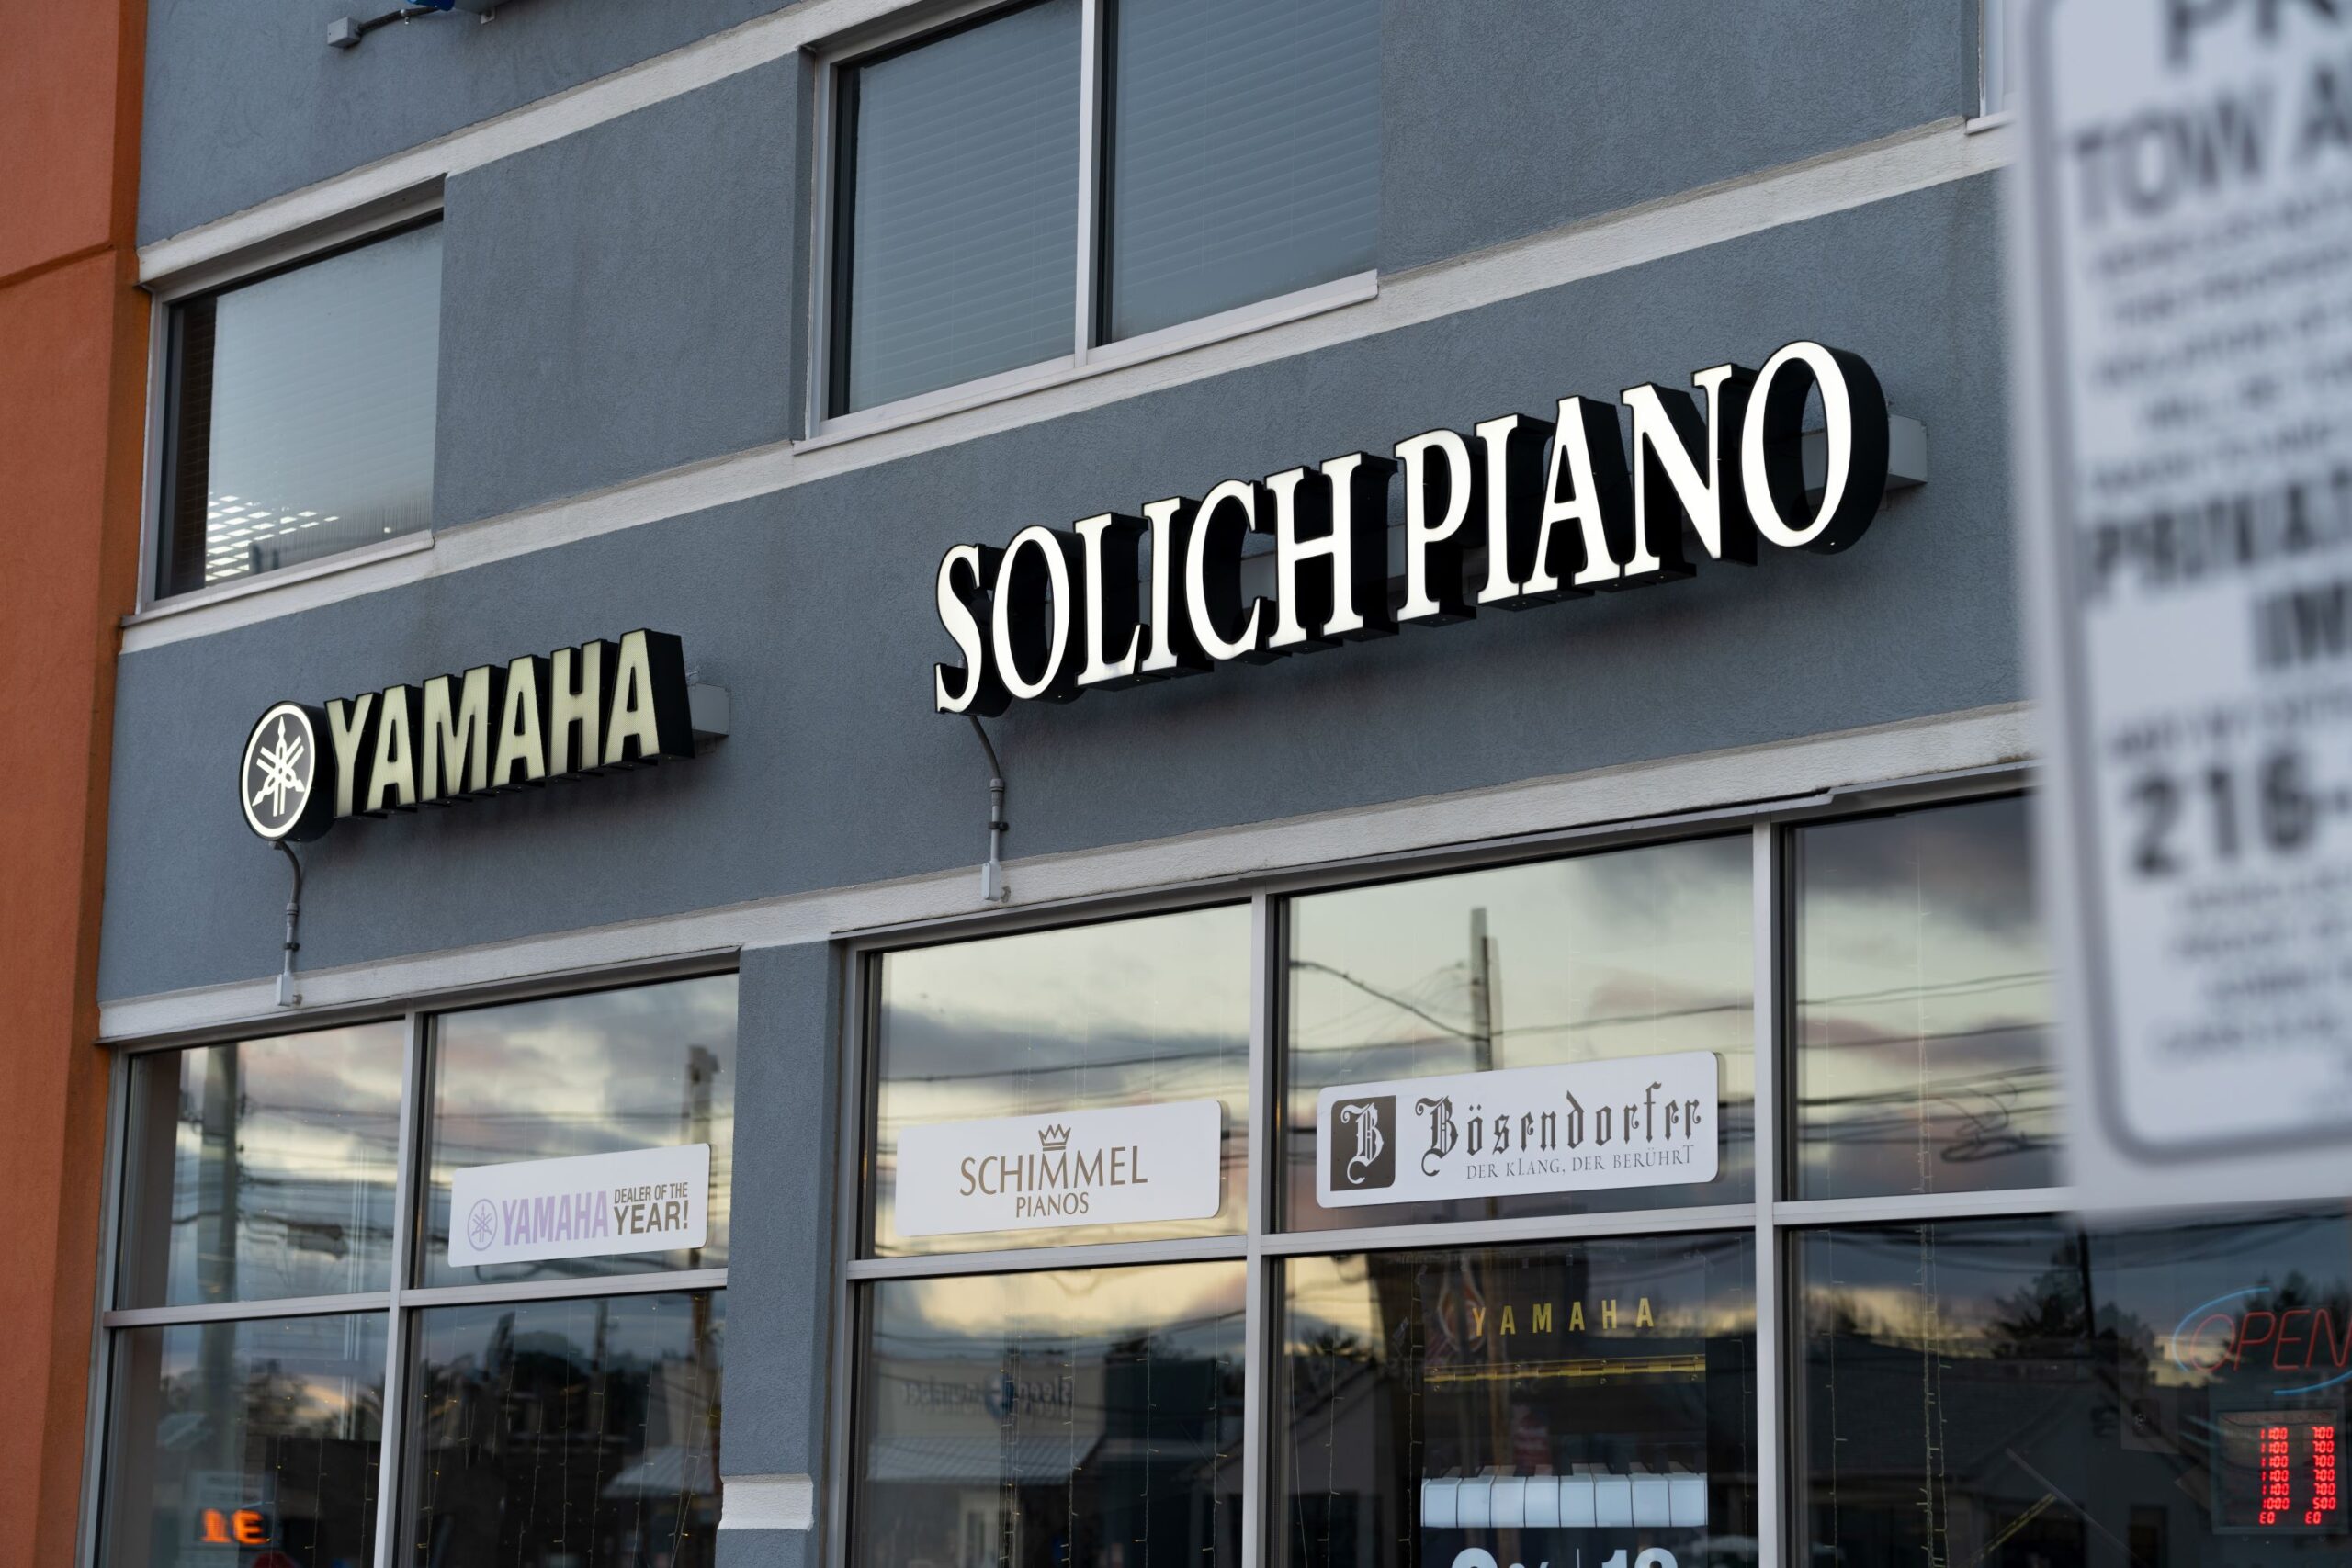 Solich Piano Cleveland Exterior